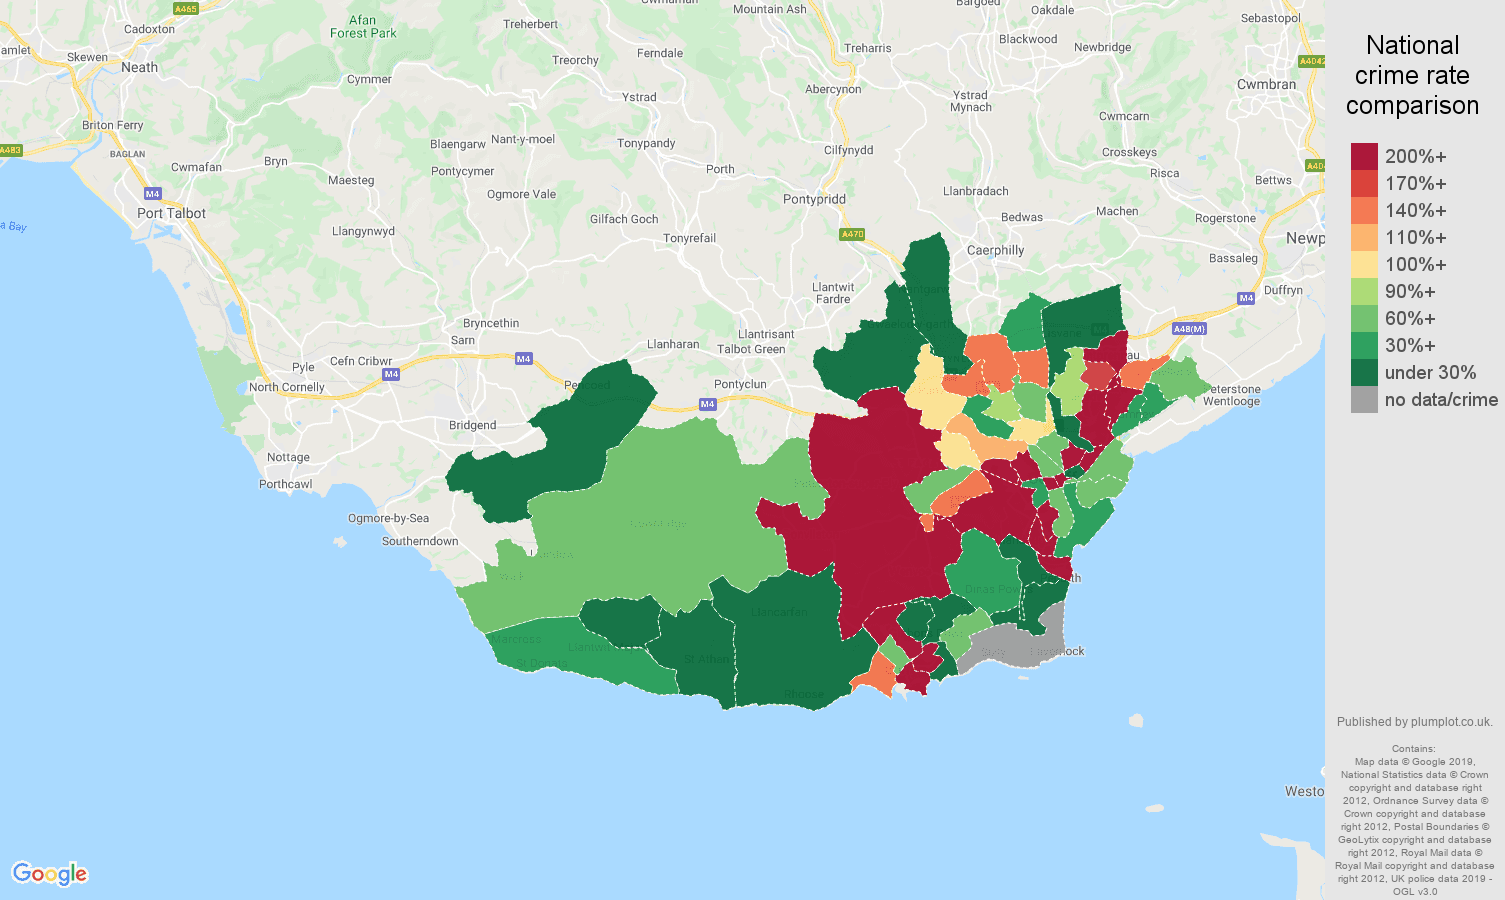 South Glamorgan shoplifting crime rate comparison map